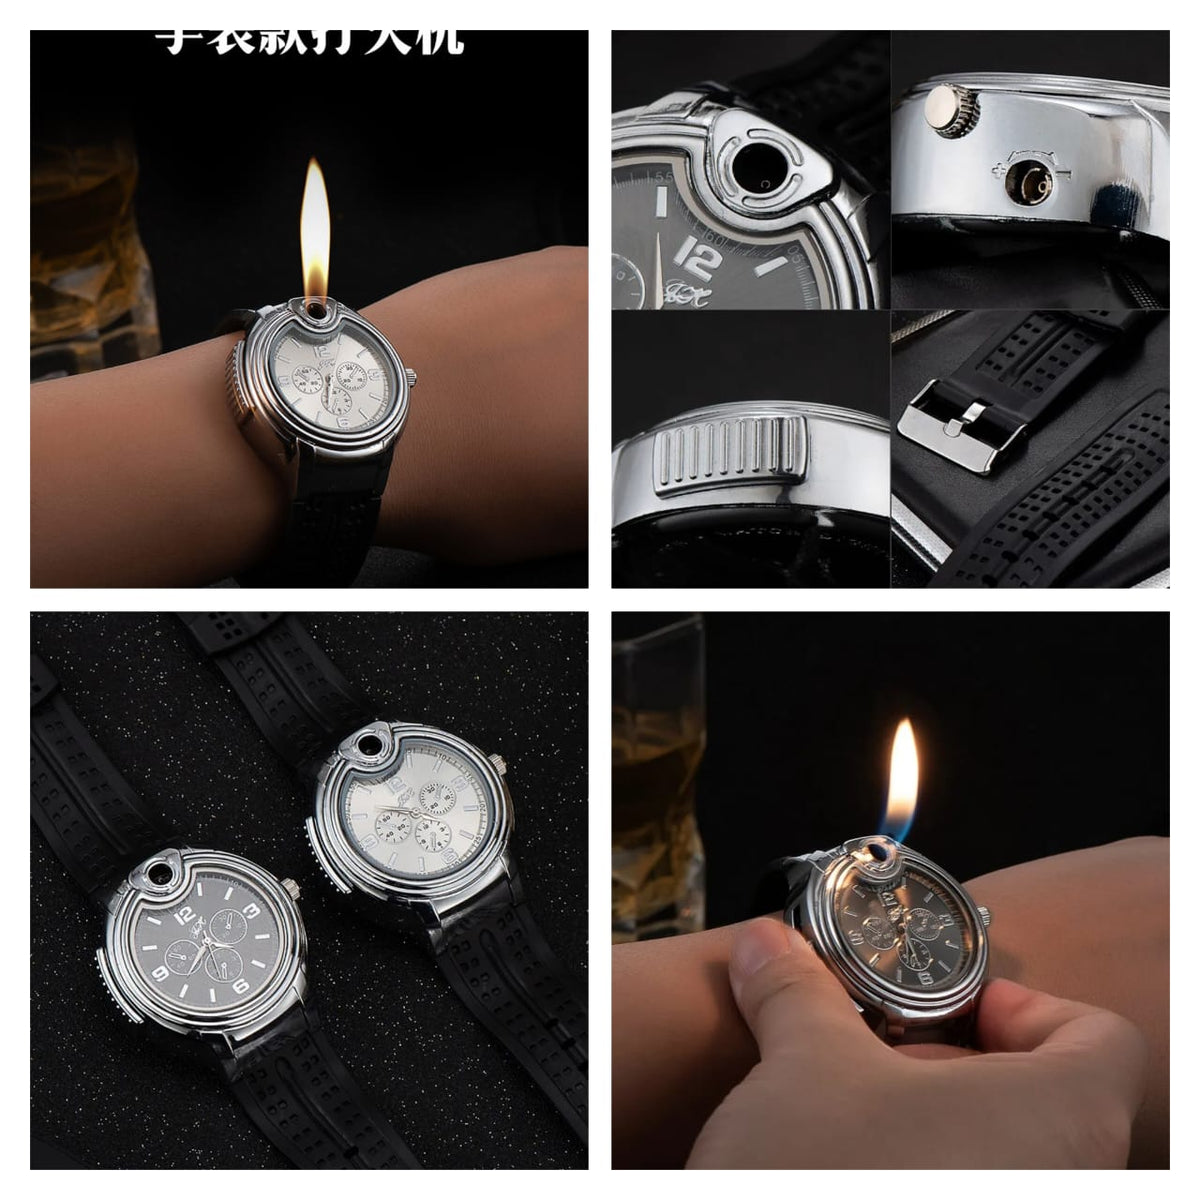 Wrist Watch Inflatable Lighter, 2 In 1 Cigarette Lighter